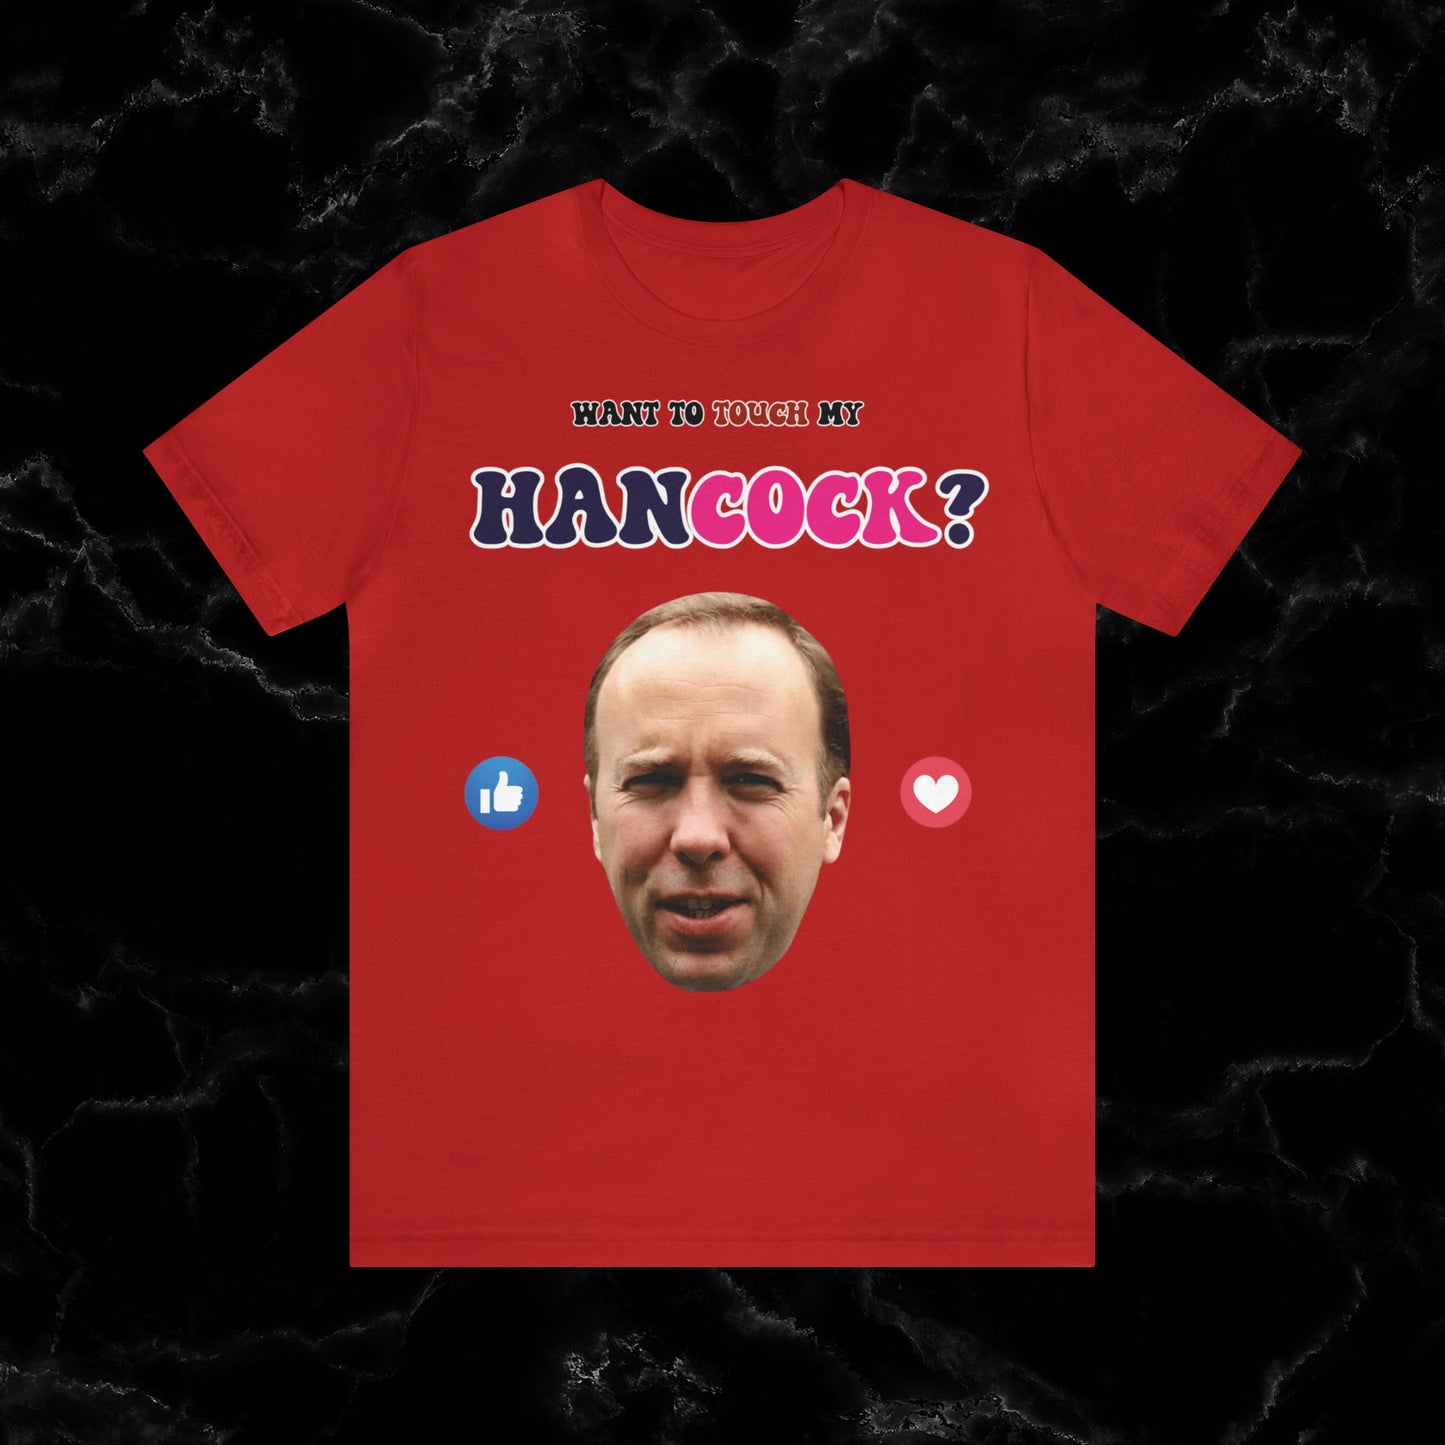 Want To Touch My Hancock T-shirt - Matt Hancock Funny Tee T-Shirt Red S 